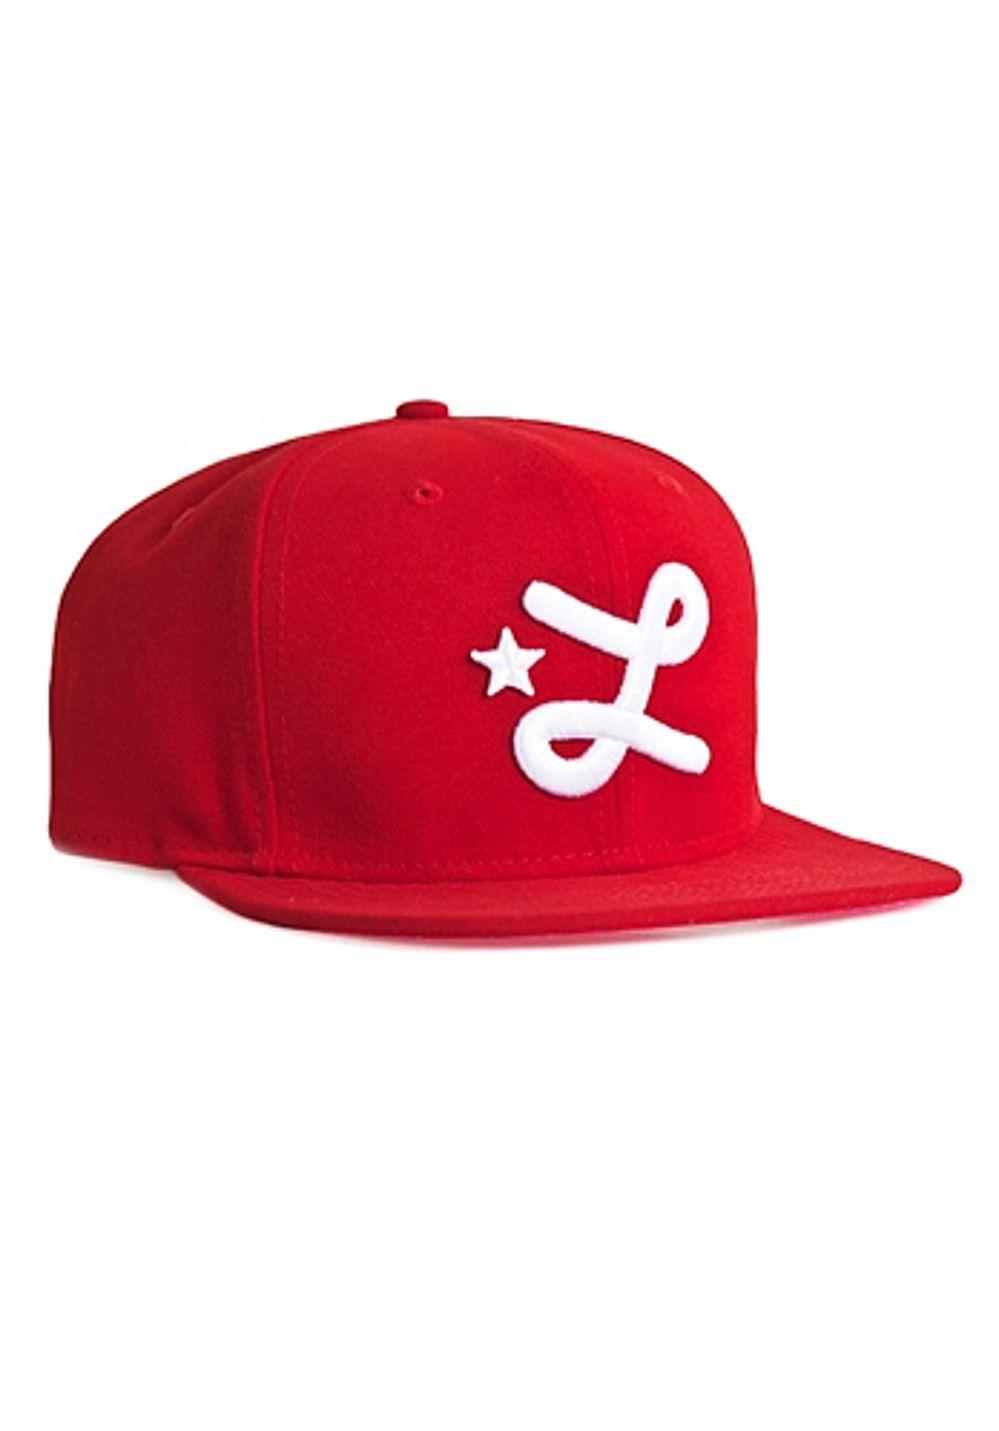 Red Cursive L Logo - LRG Cursive L - Hat for Men - Red - Planet Sports